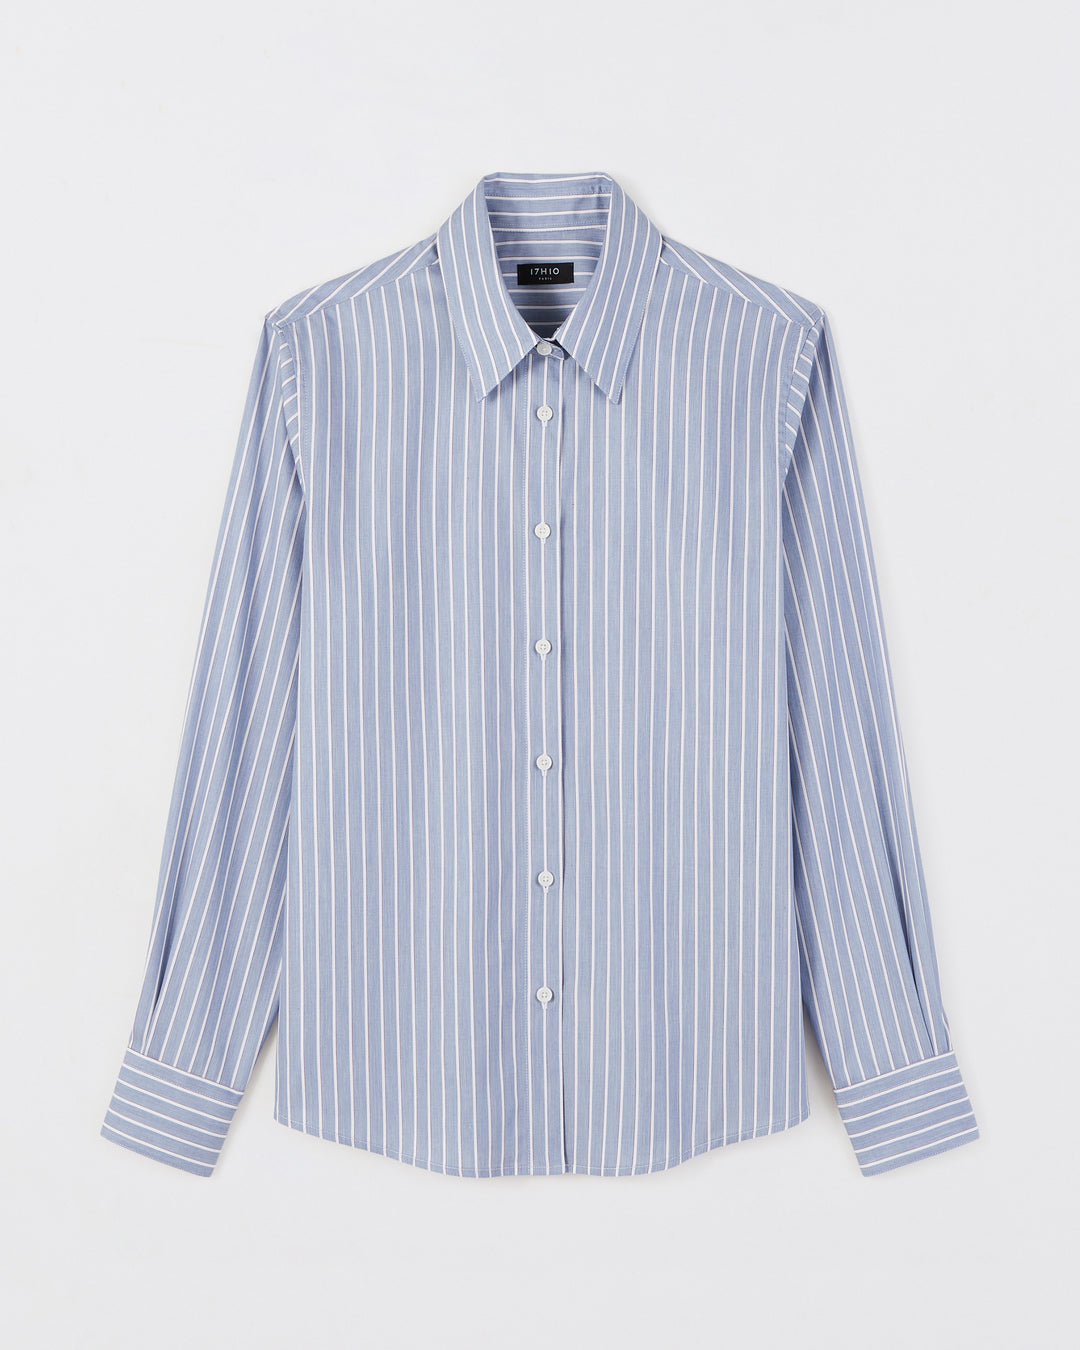 Hudson shirt - Striped